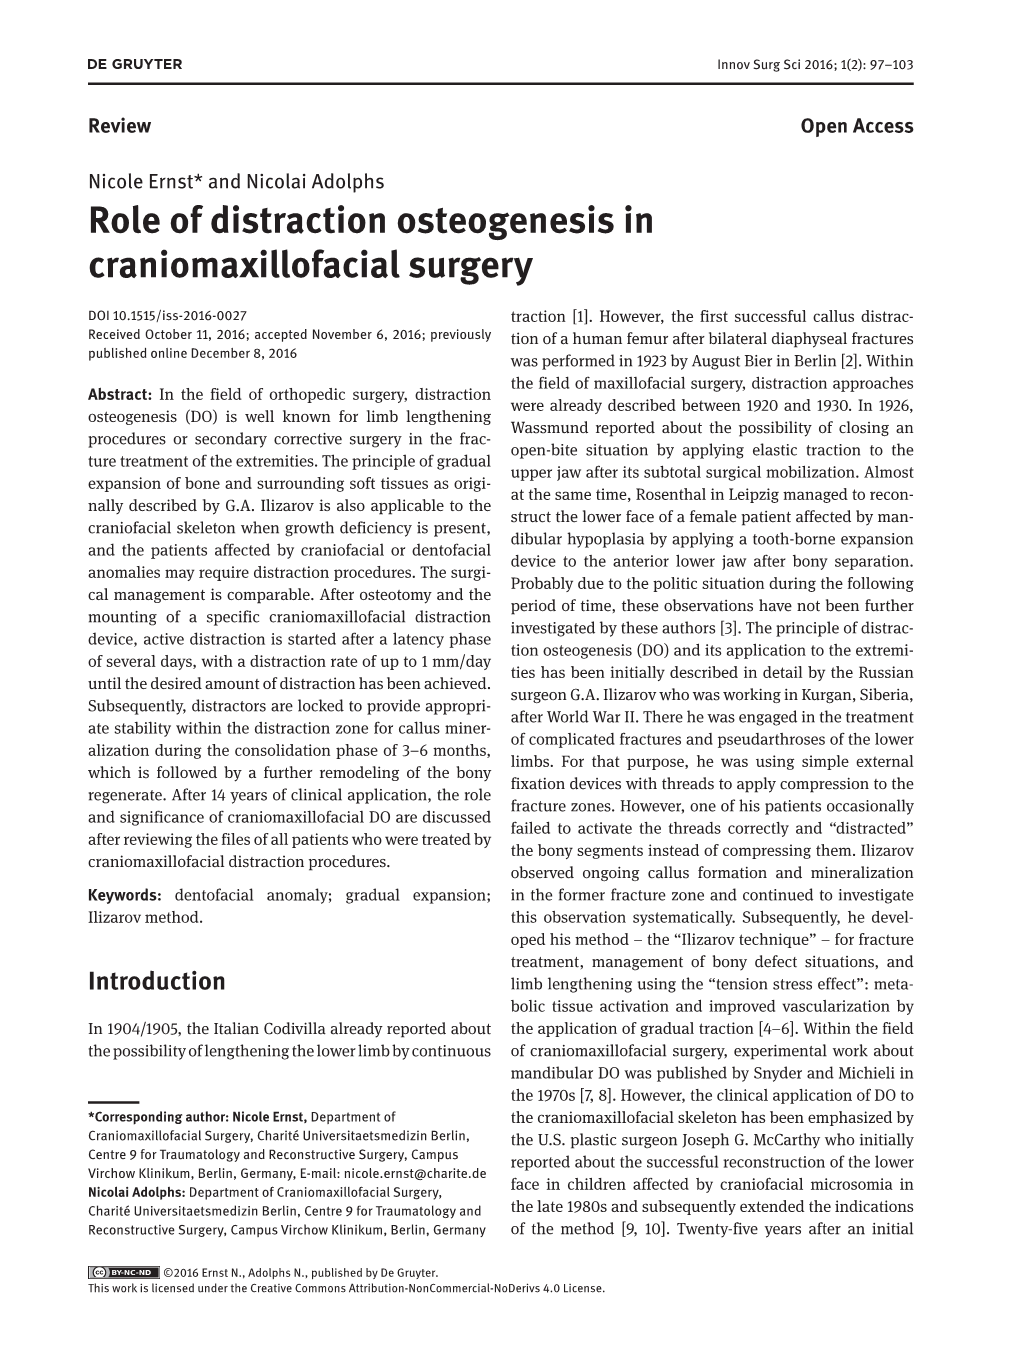 Role of Distraction Osteogenesis in Craniomaxillofacial Surgery